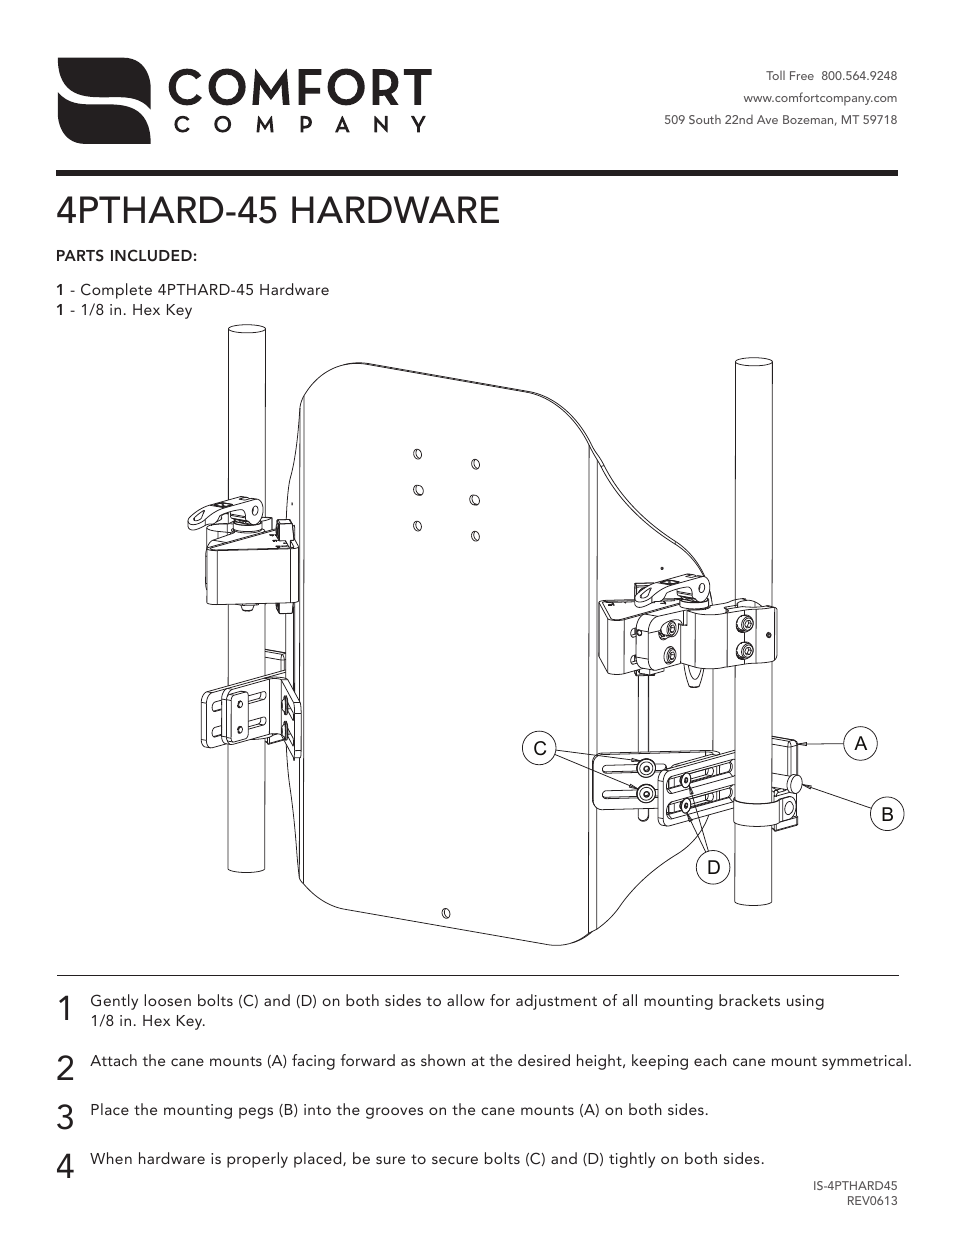 4PTHARD-45 Hardware